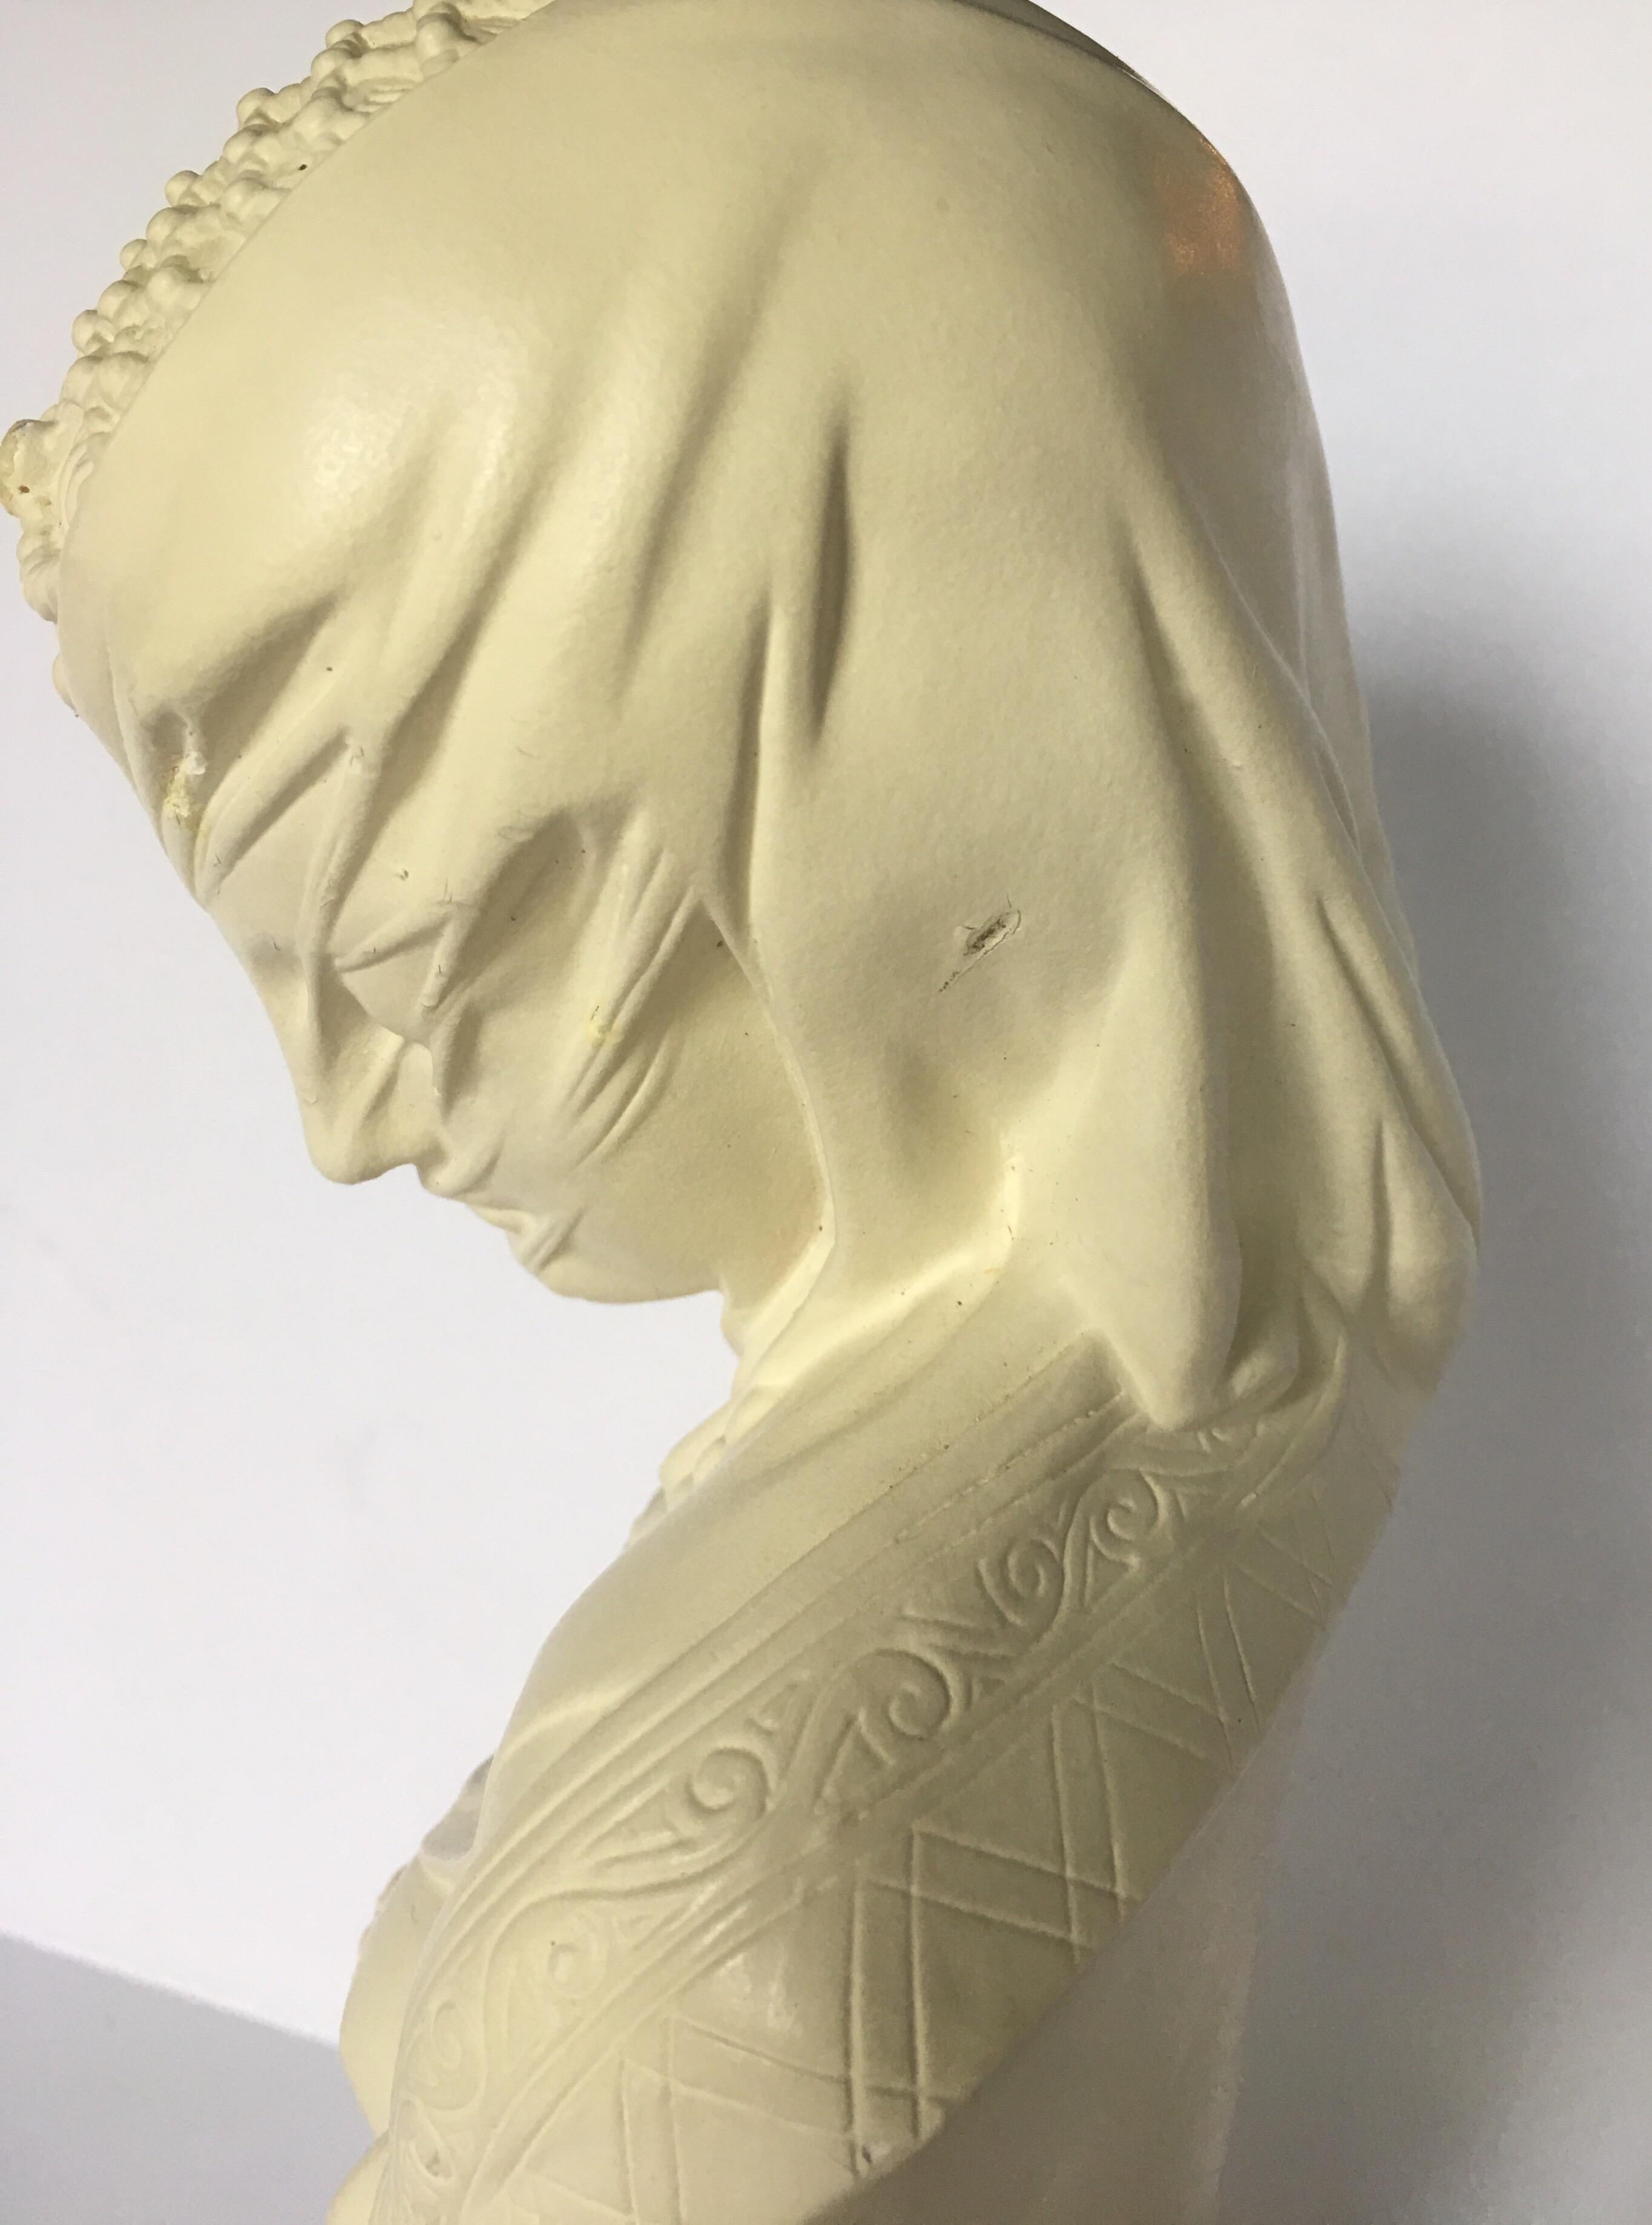 Draped Veil Female Bust Sculpture by Alva Studios 1